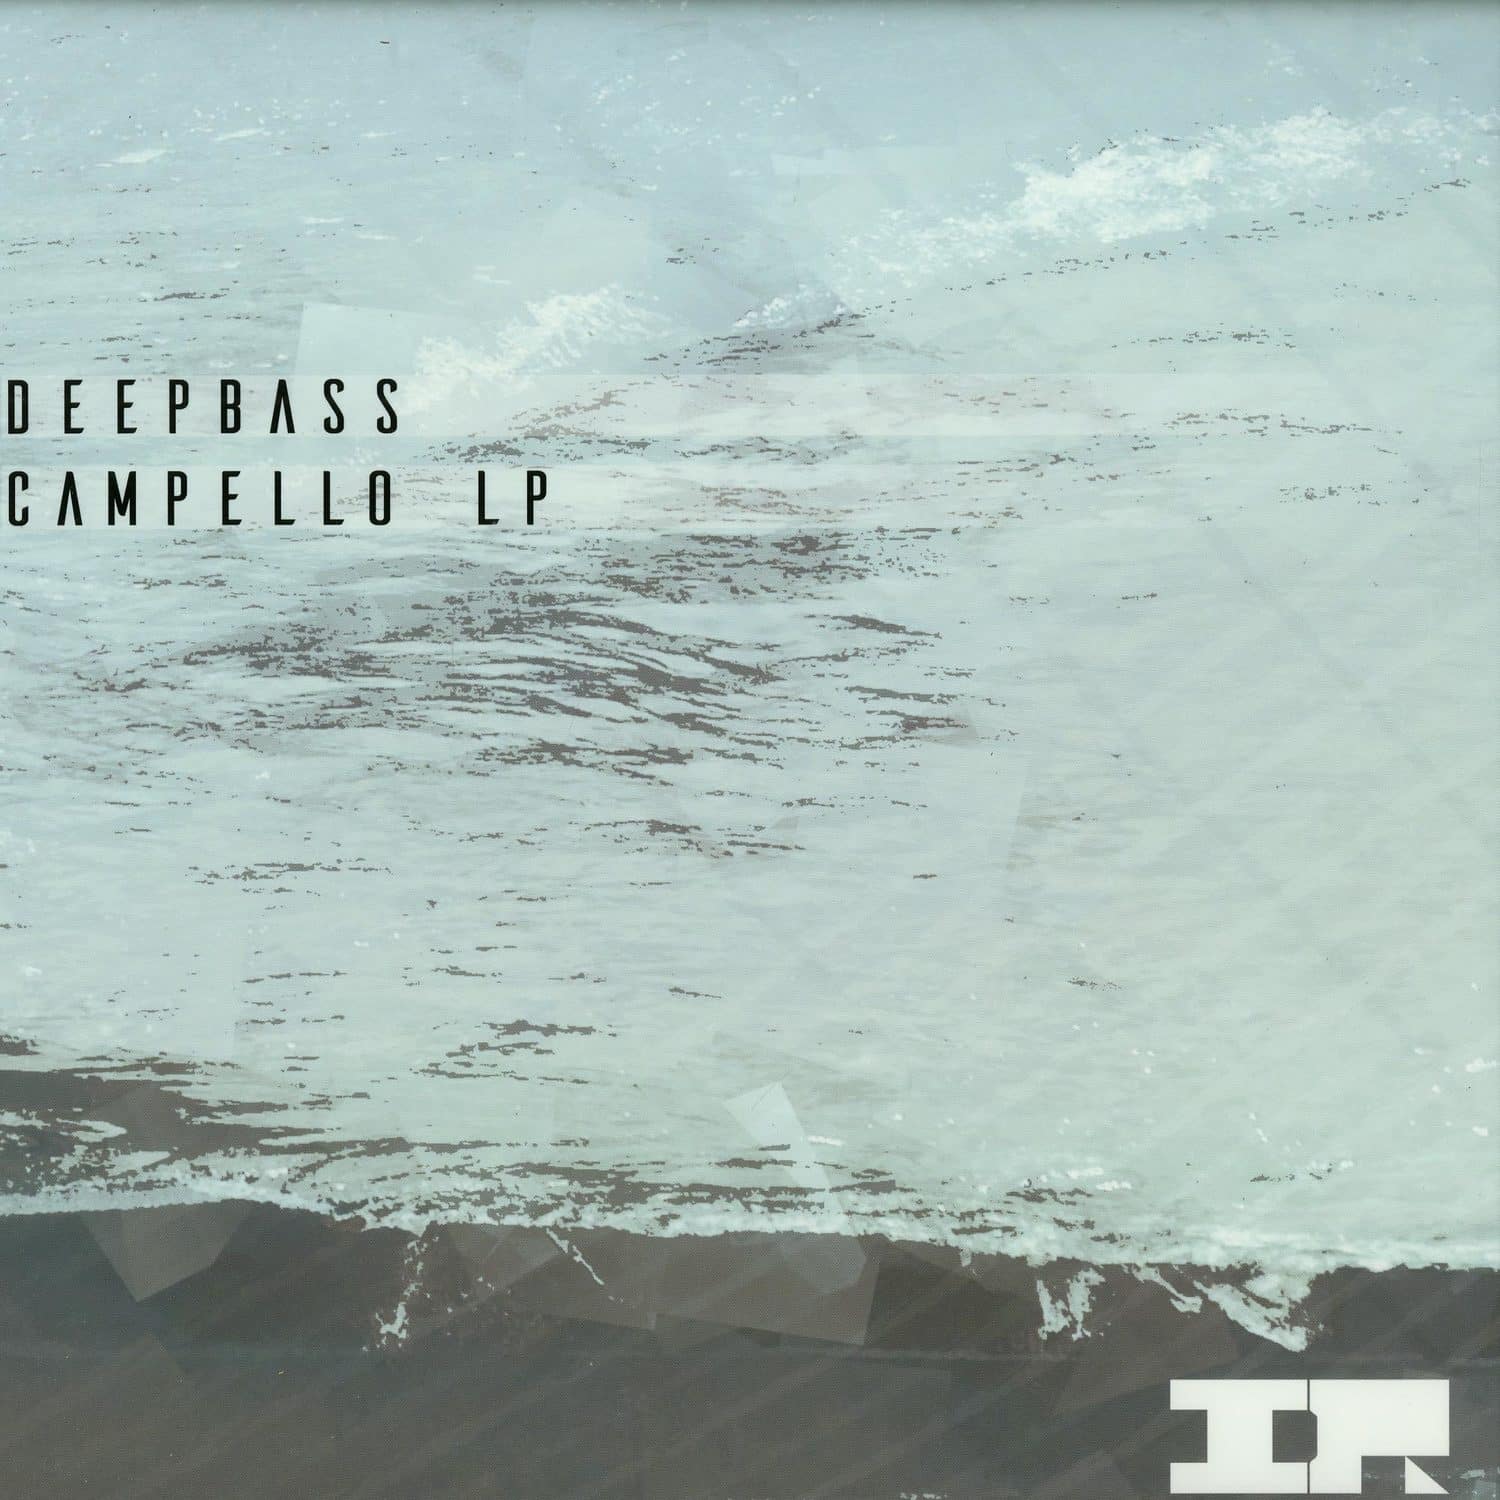 Deepbass - CAMPELLO 